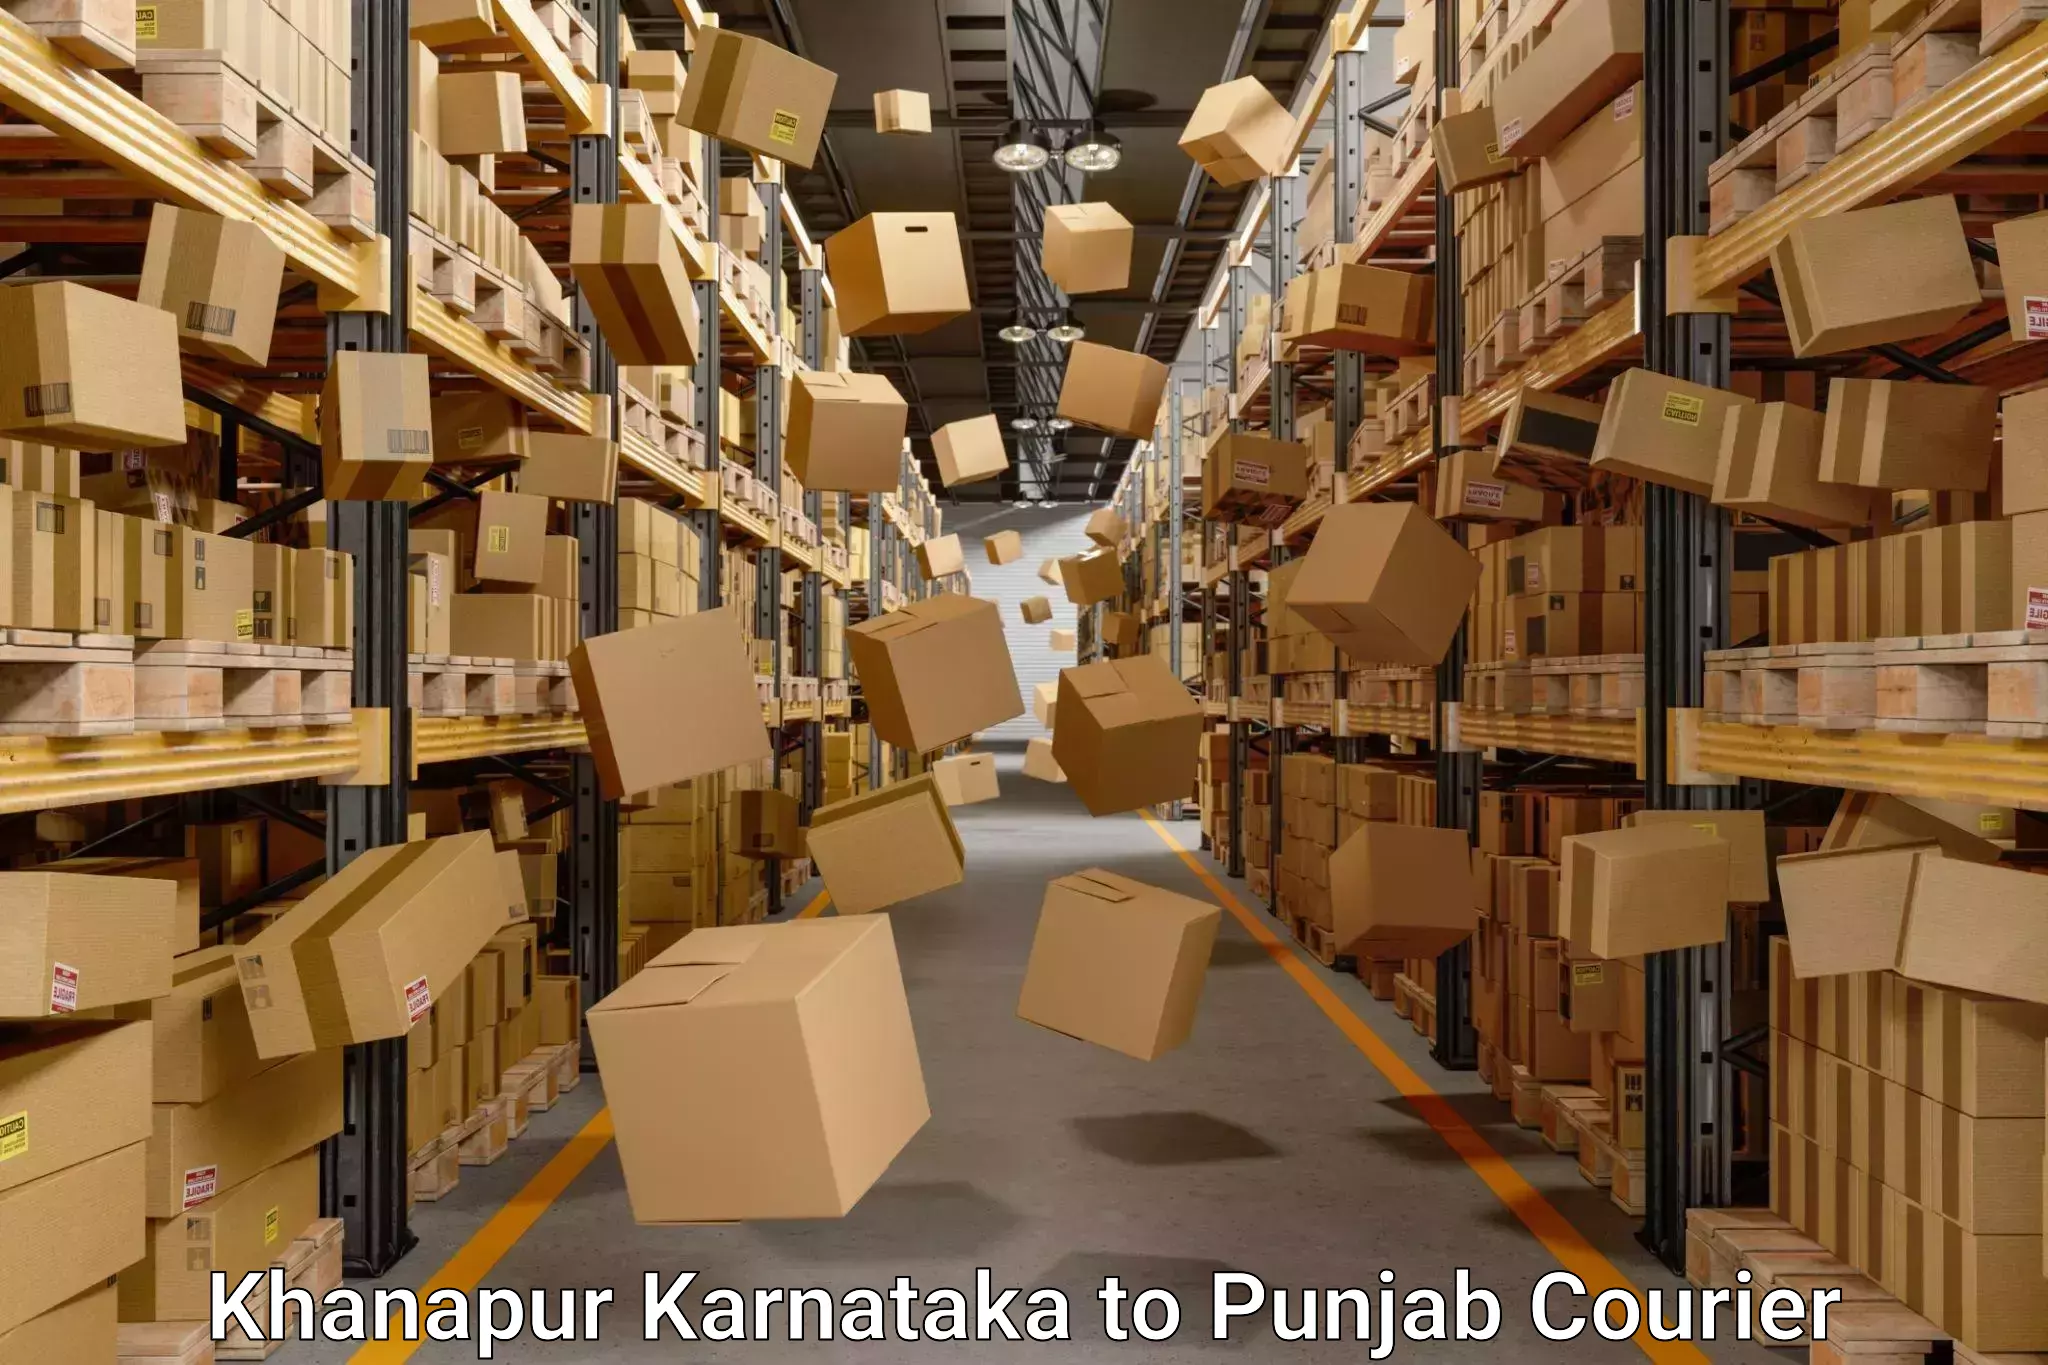 Household moving experts Khanapur Karnataka to Punjab